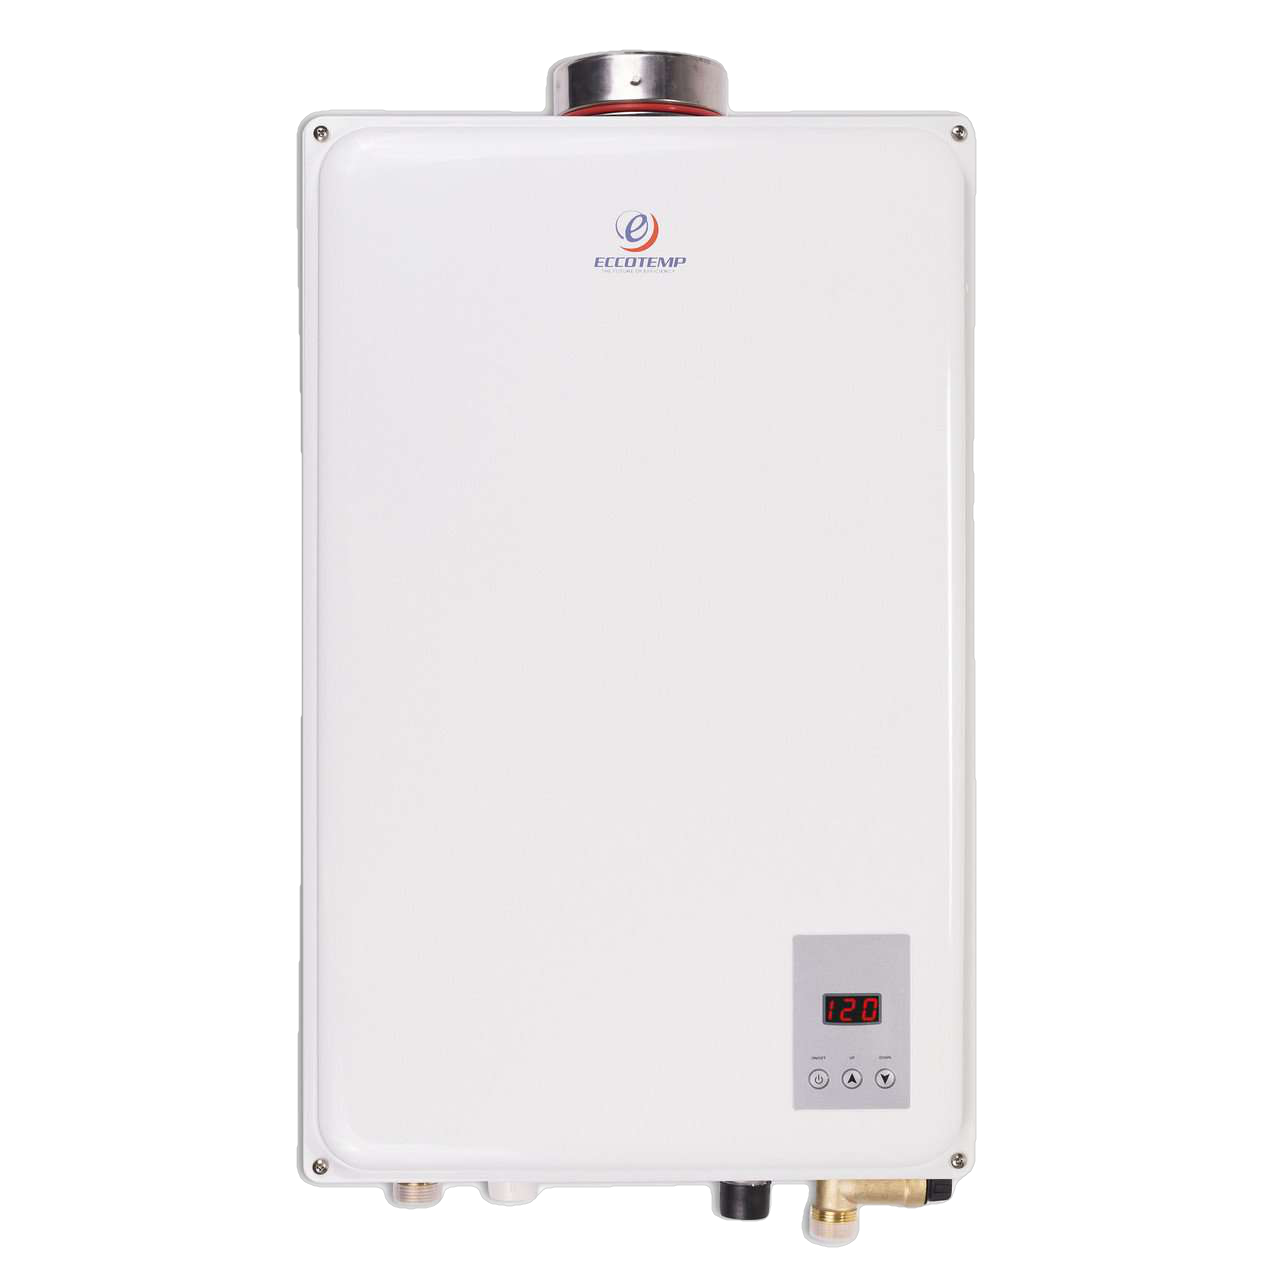 Eccotemp, Eccotemp 45HI-LP 6.8 GPM Propane Tankless Water Heater Manufacturer RFB